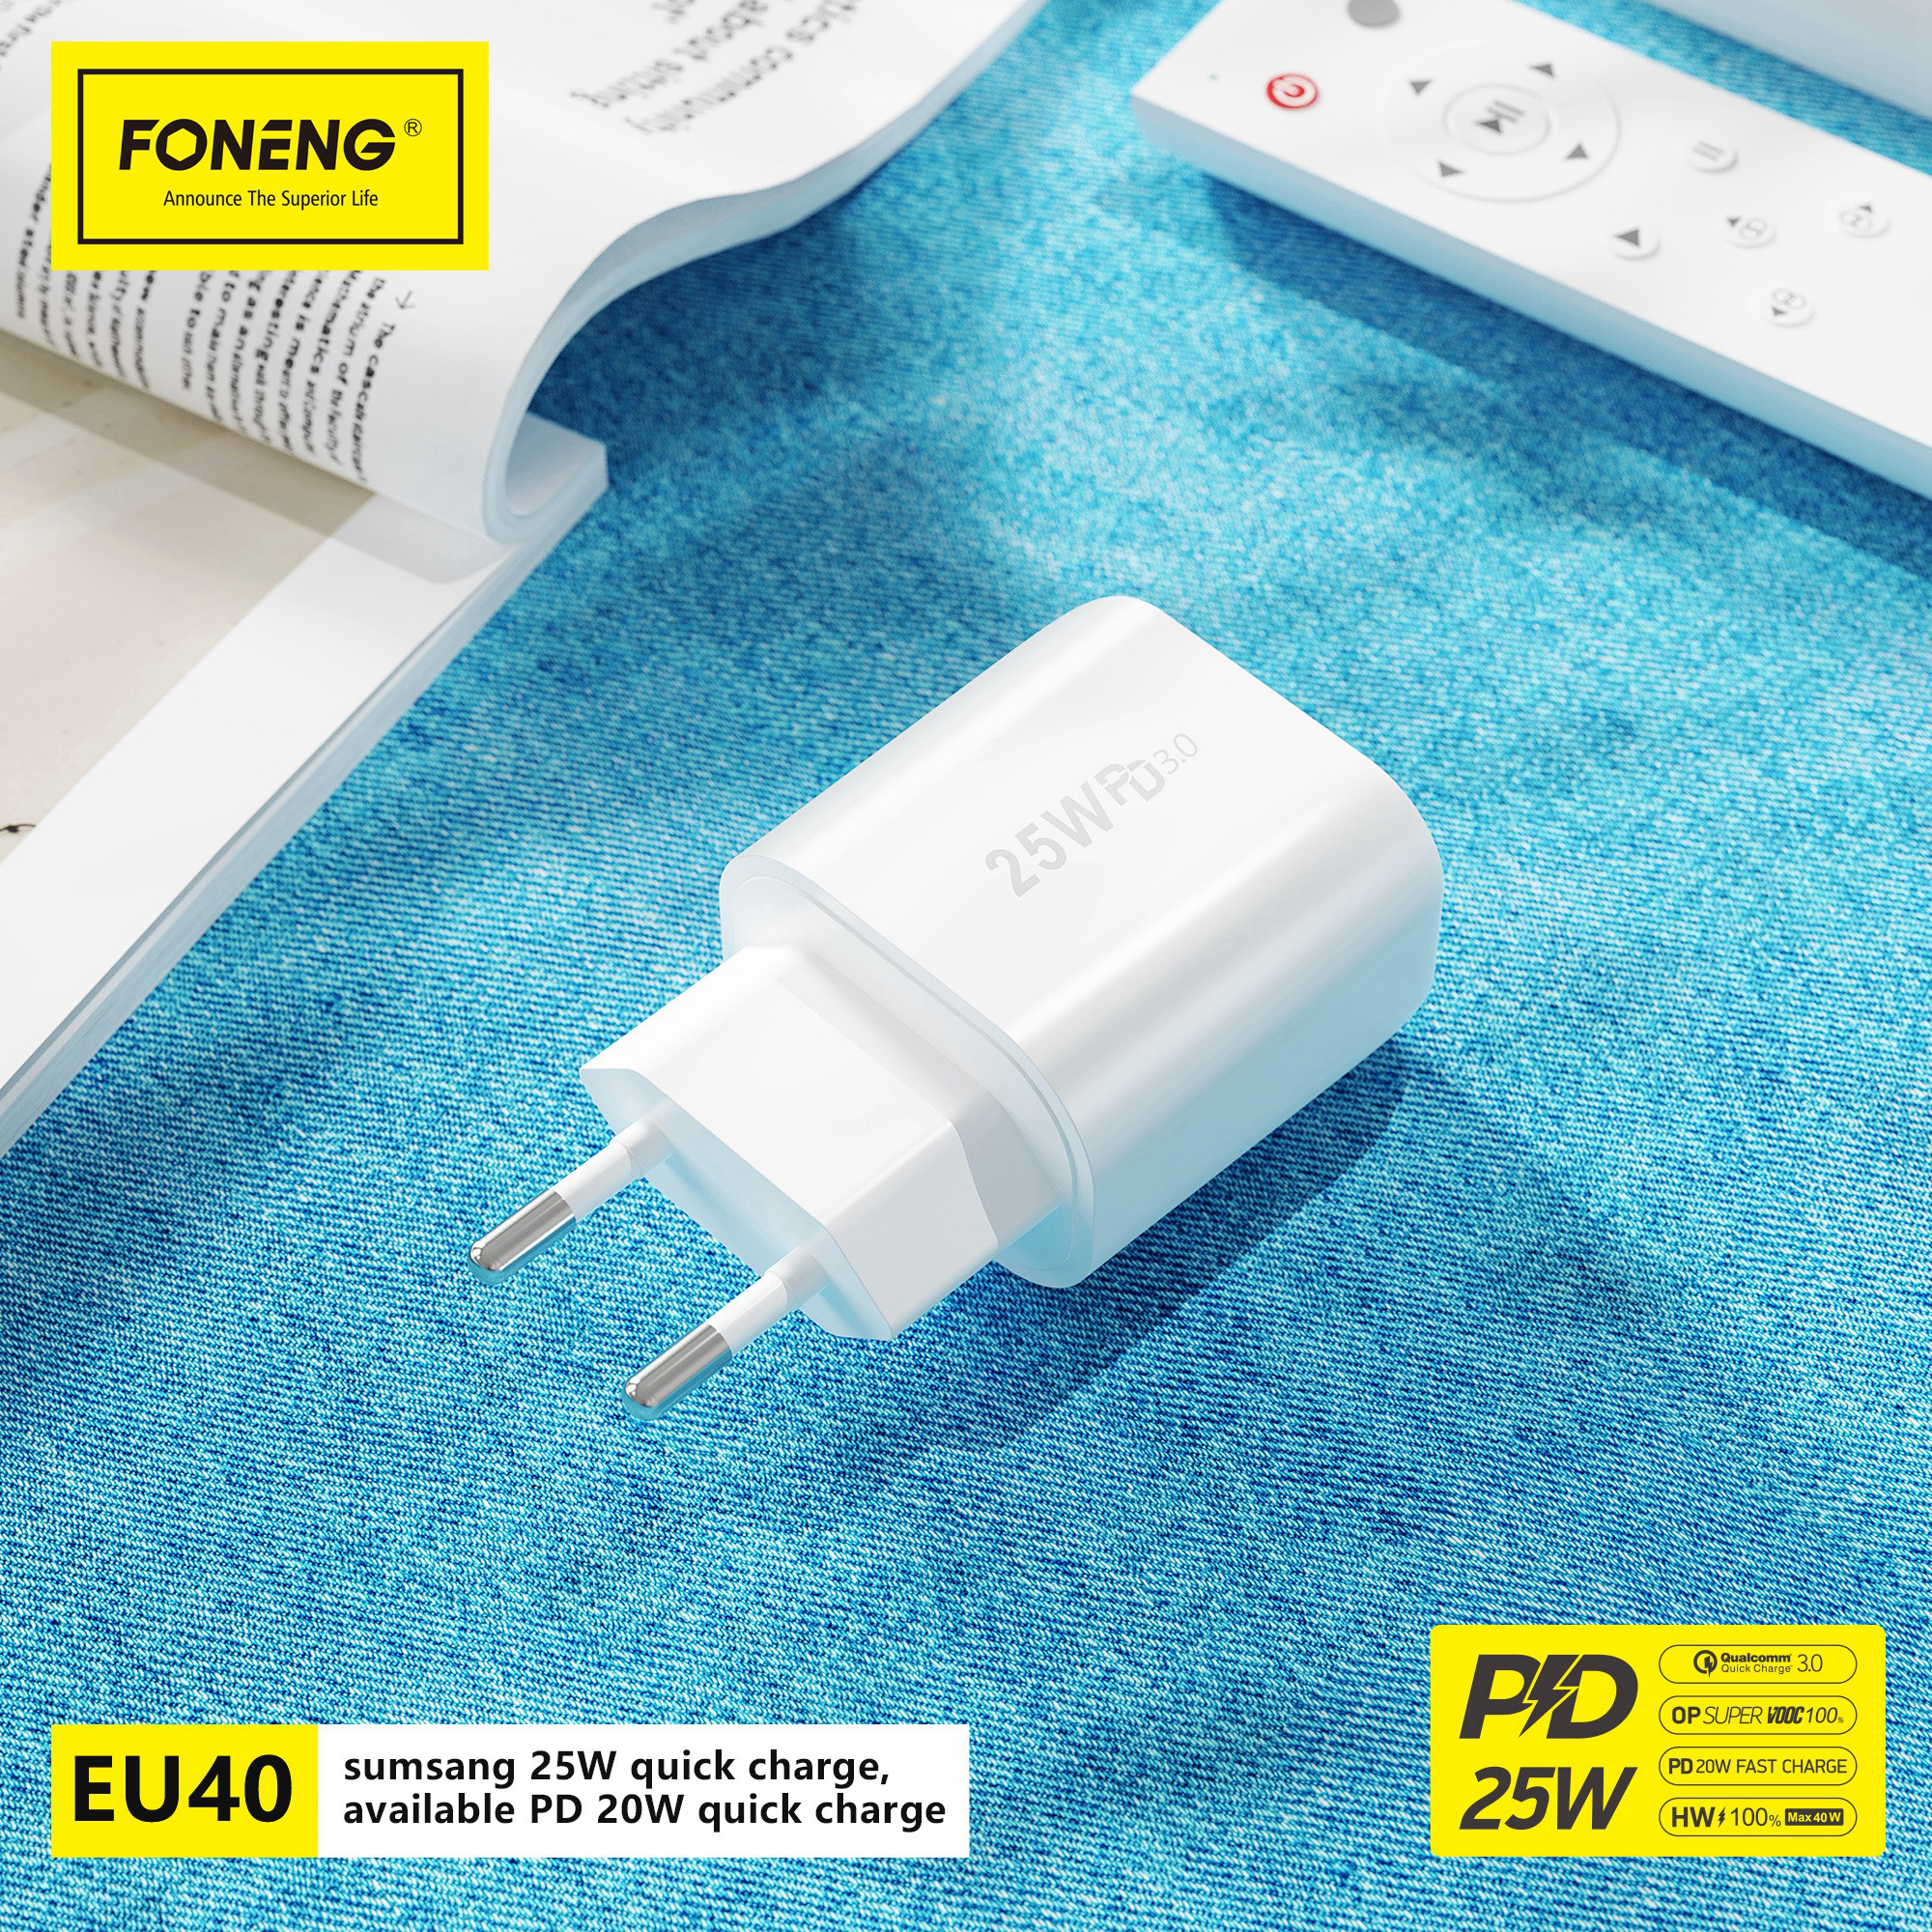 EU40 USB-C Super Fast Charging PD 25W Wall Charger (EU Plug) Featured Image